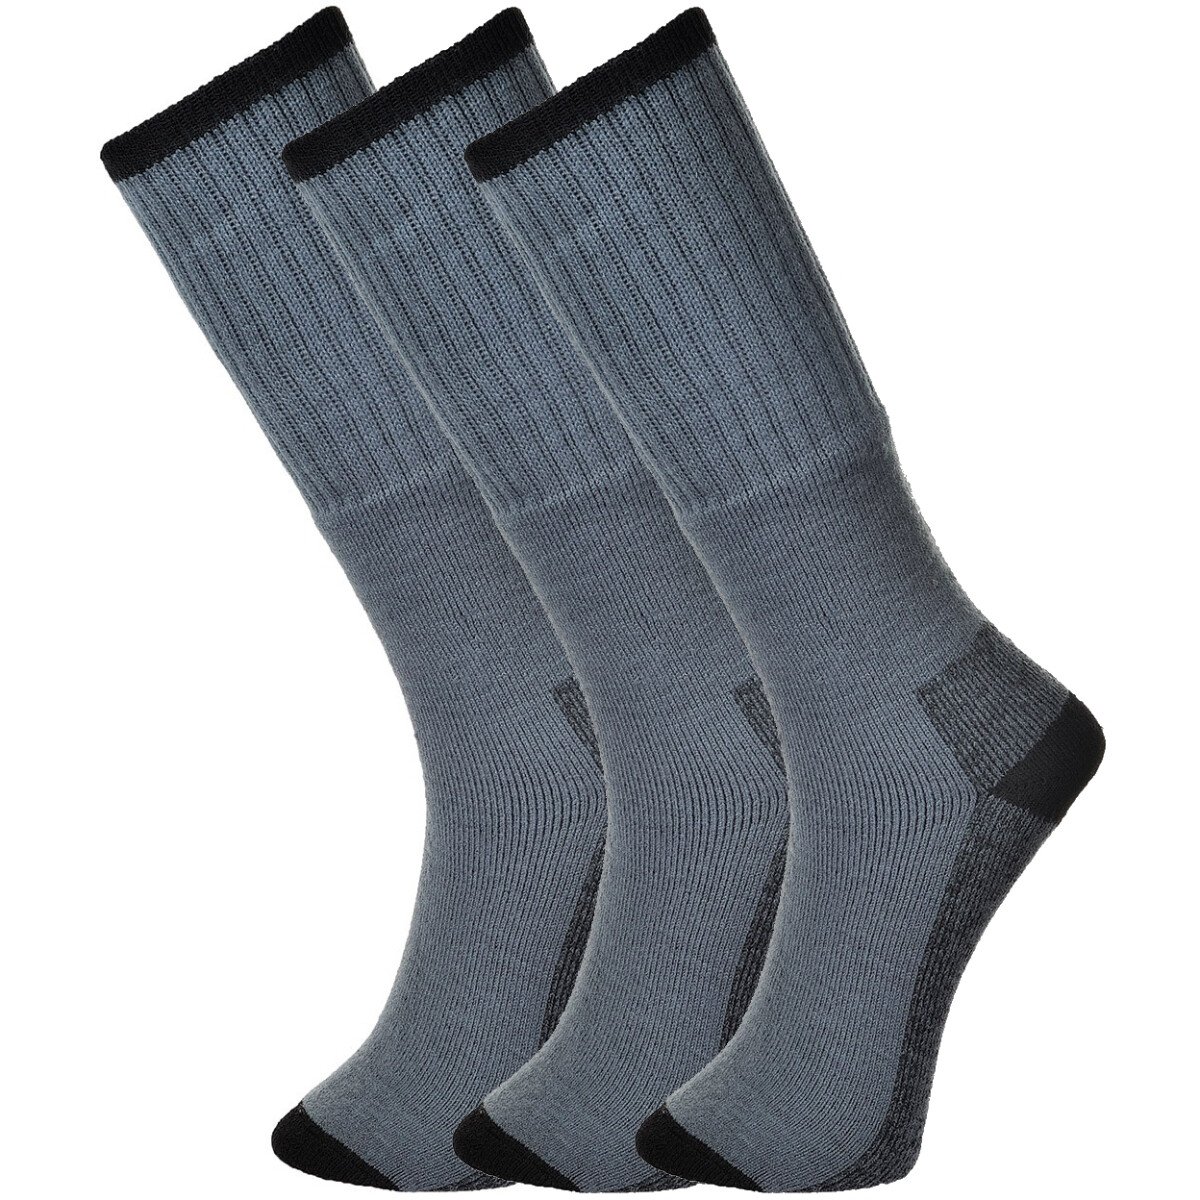 Portwest SK33 Grey Size 6 - Size 9 (EU39 - EU43) Workwear Socks Triple Pack